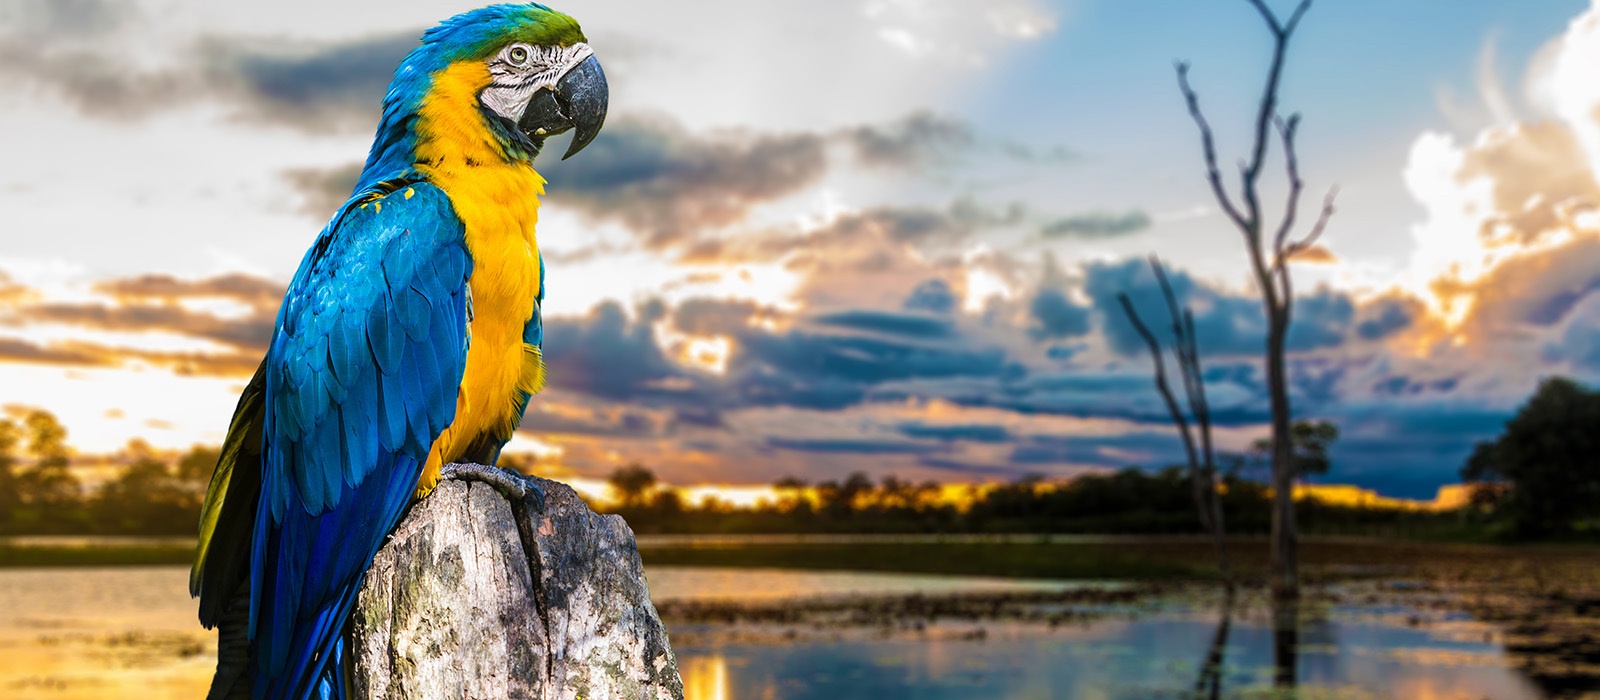 Pantanal : immersion en pleine nature